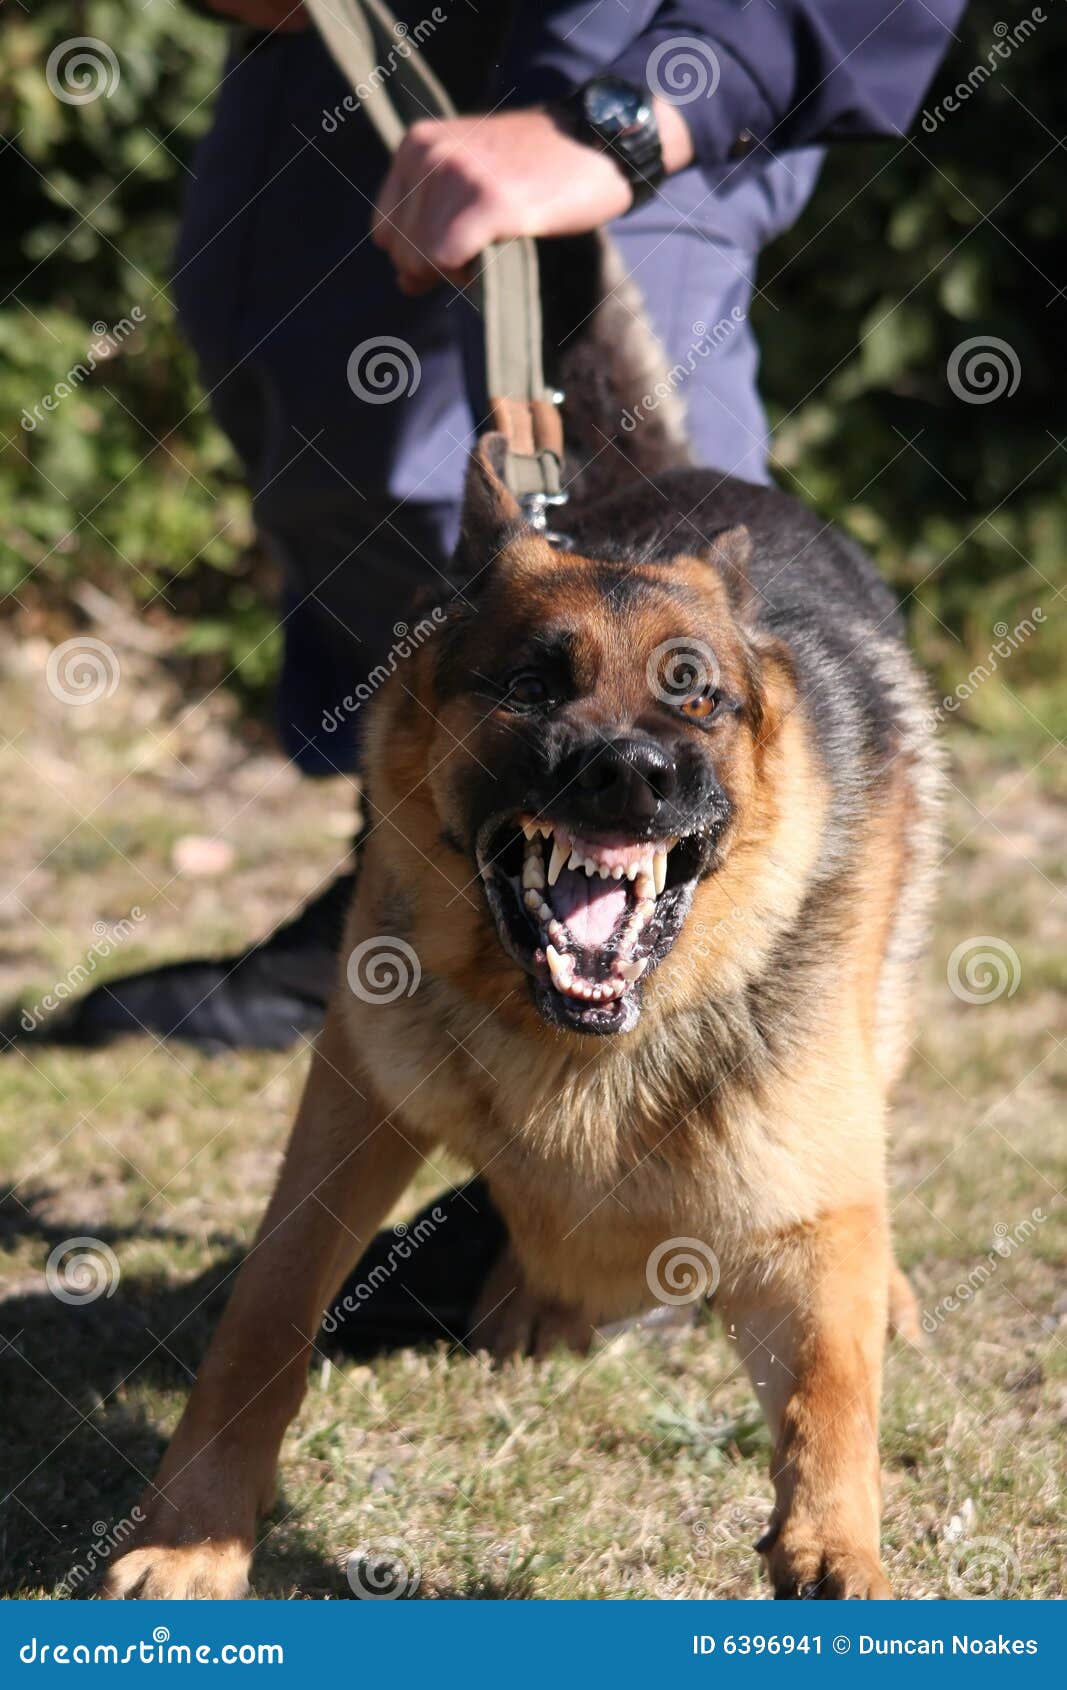  Chien  policier f ch  image stock Image du uniforme canin 